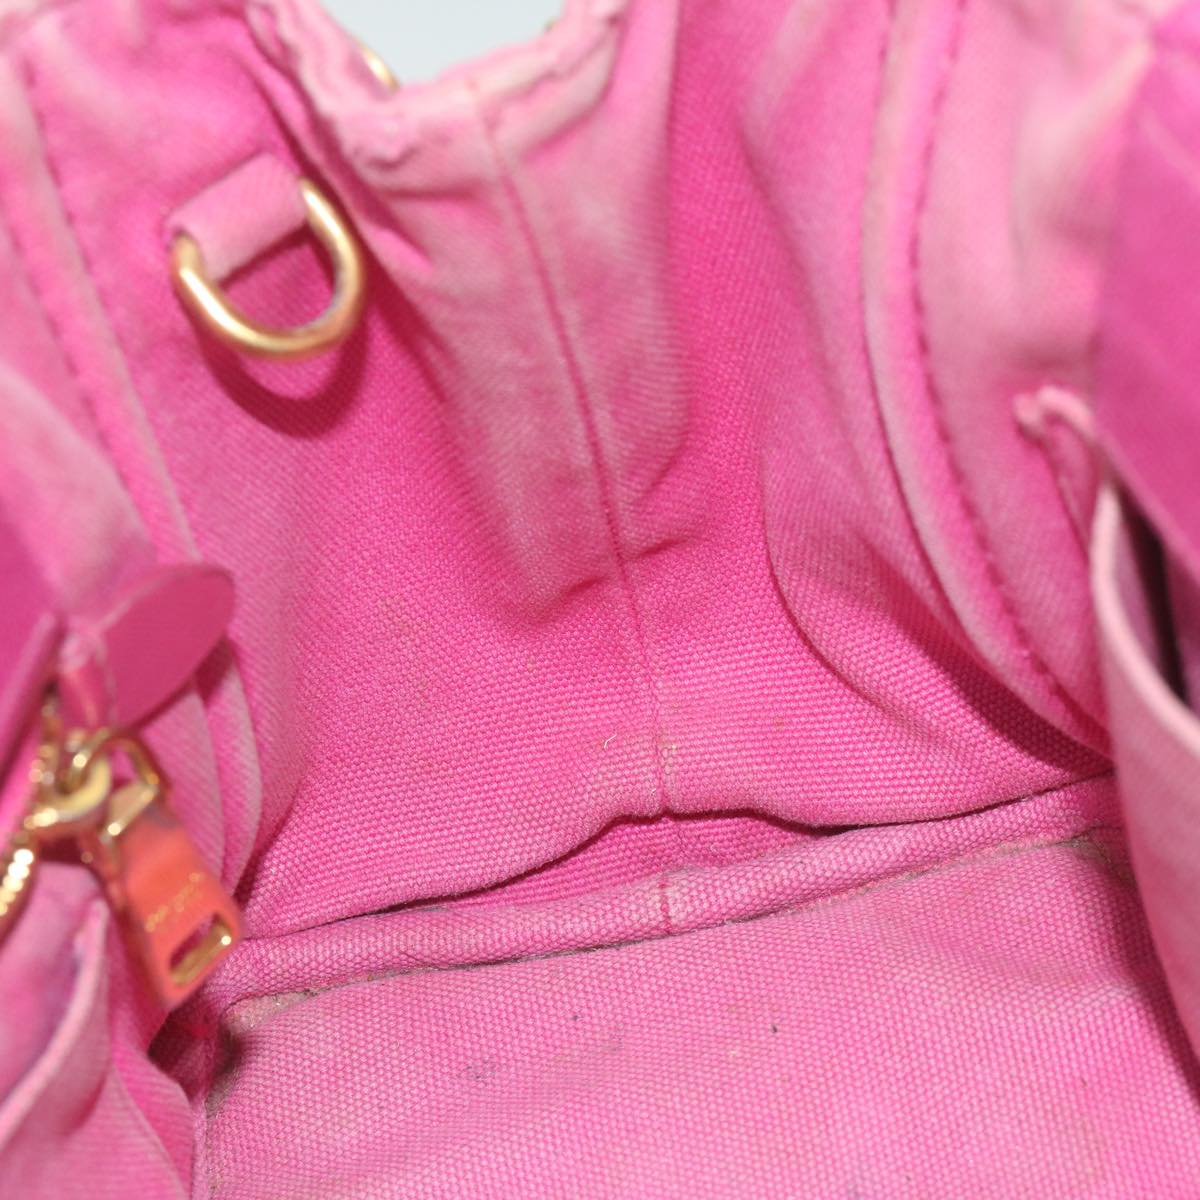 PRADA Canapa PM Hand Bag Canvas Pink Auth yb475